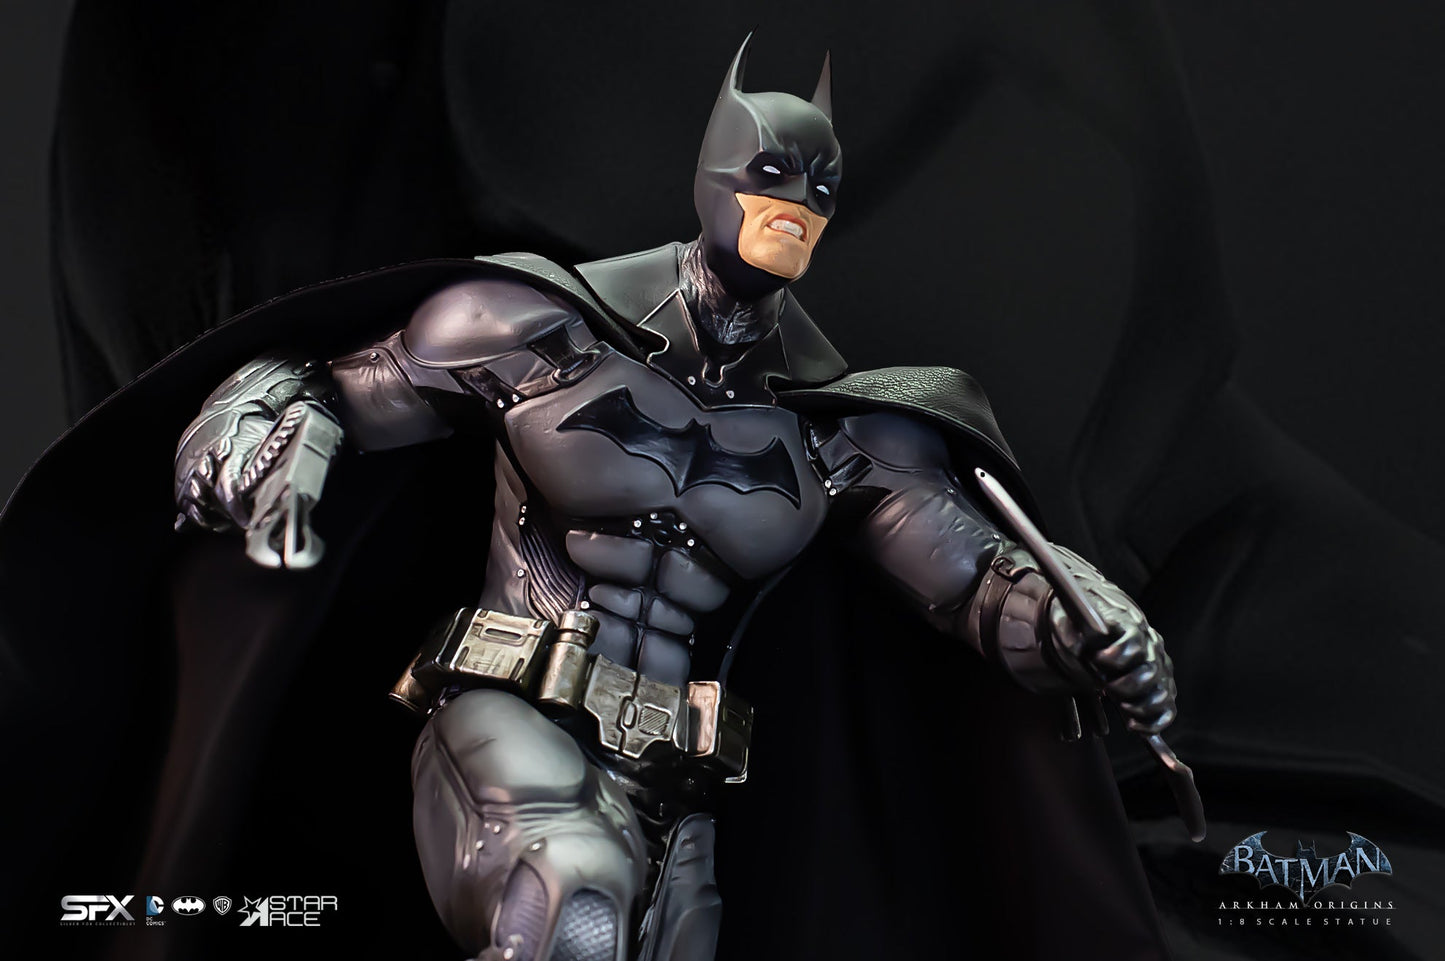 Batman Arkham Origins 2.0 DX Statue